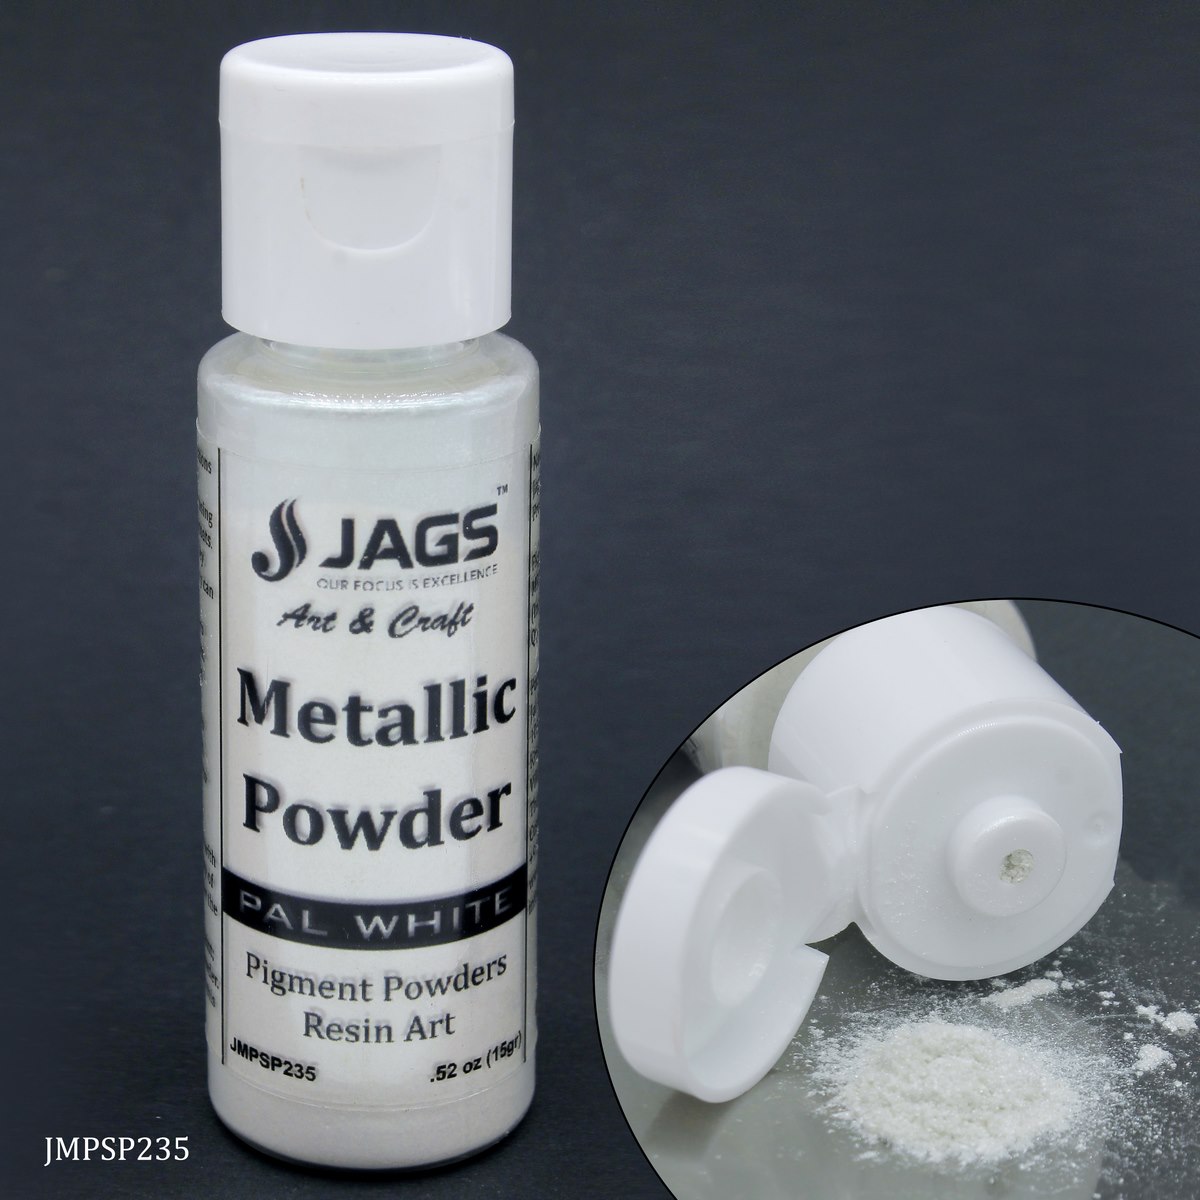 Jags Metallic Powder Pal White 15Gms JMPSP235